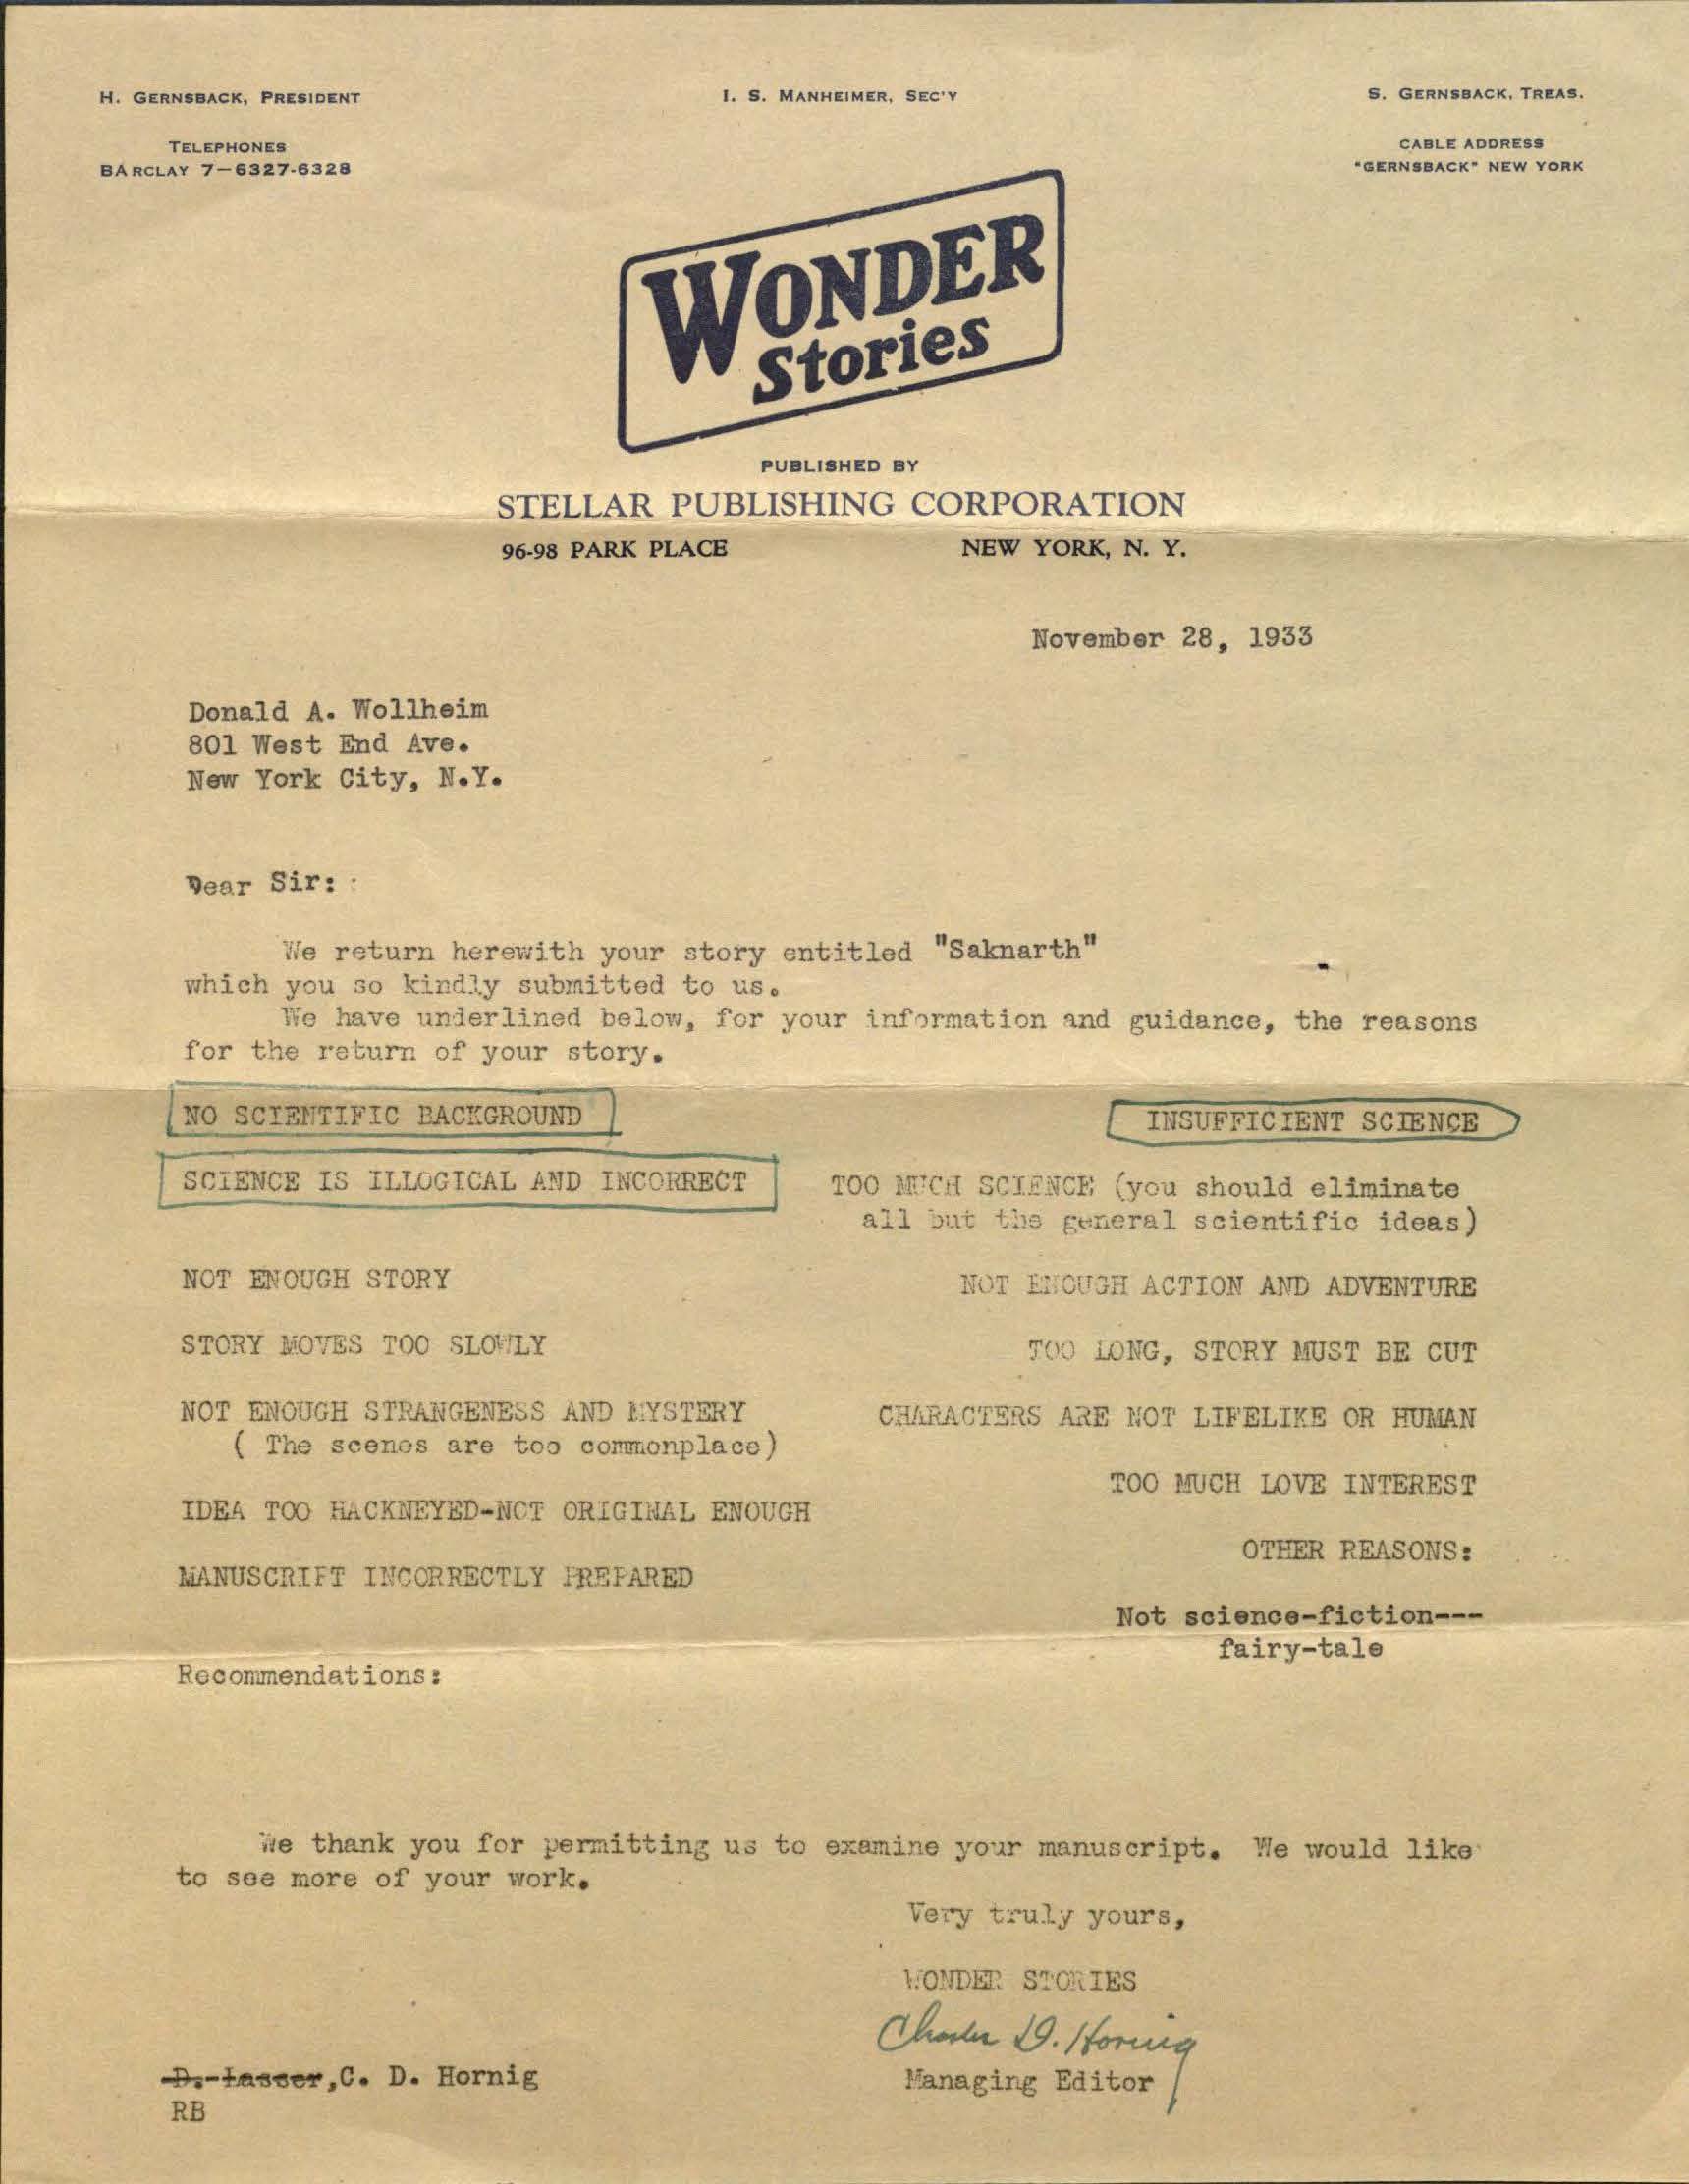 Image of Wonder Stories' form rejection letter for Donald A. Wollheim's "Saknarth," November 28, 1933.